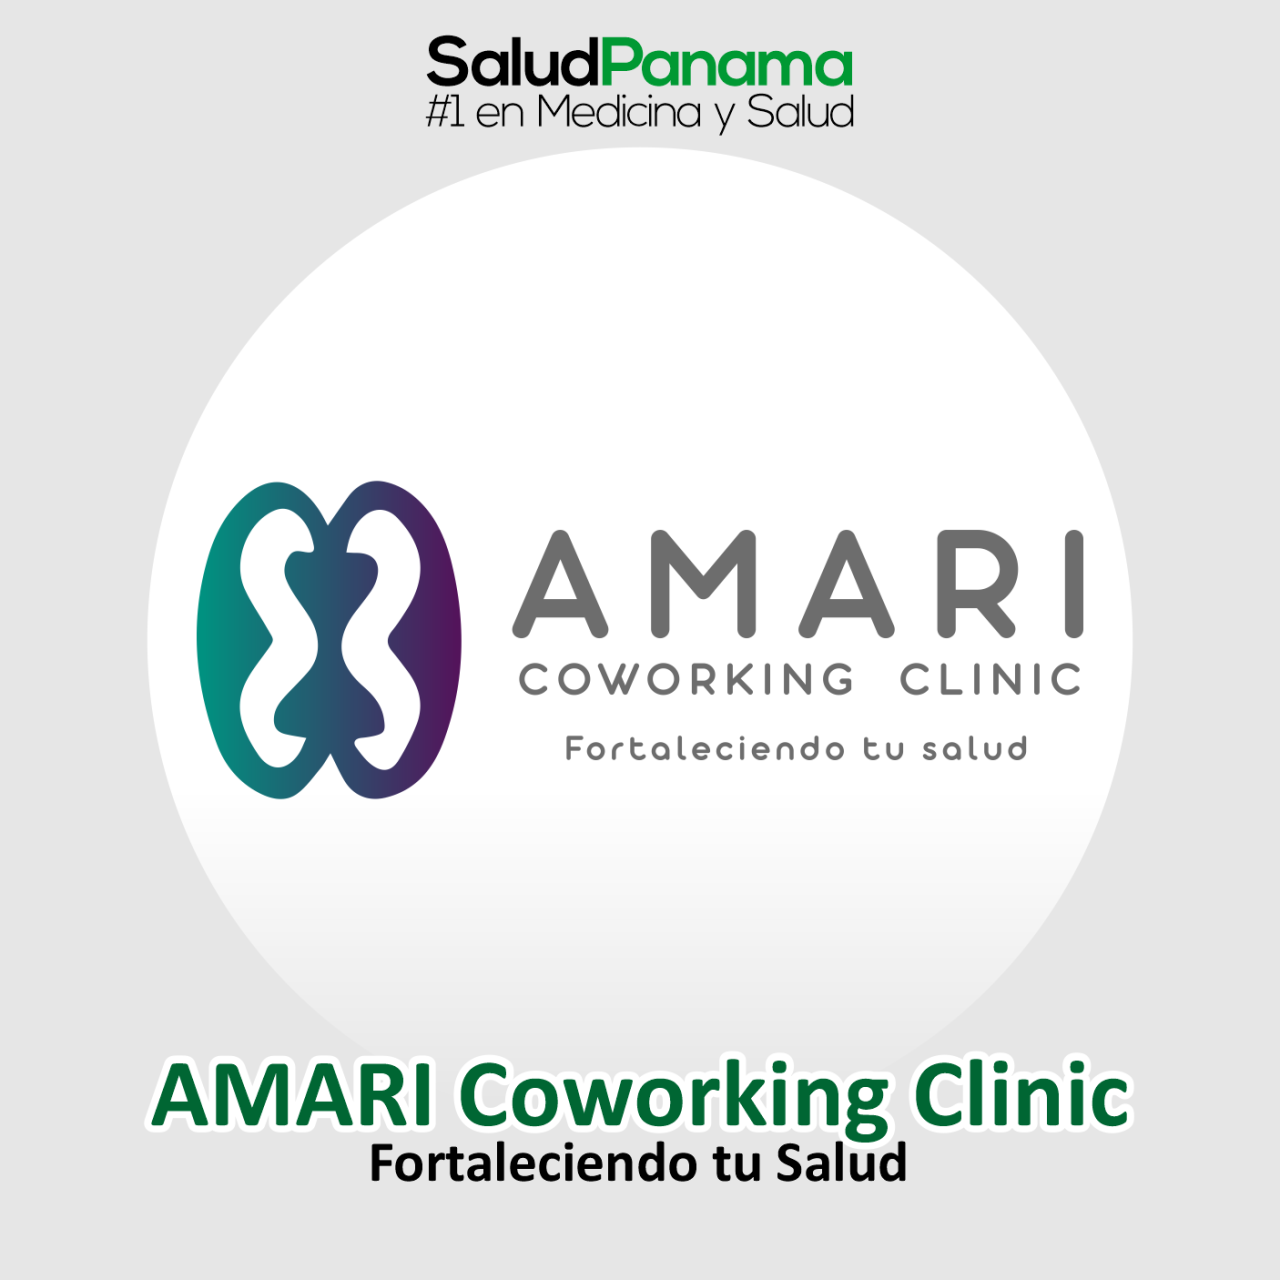 AMARI Coworking Clinic